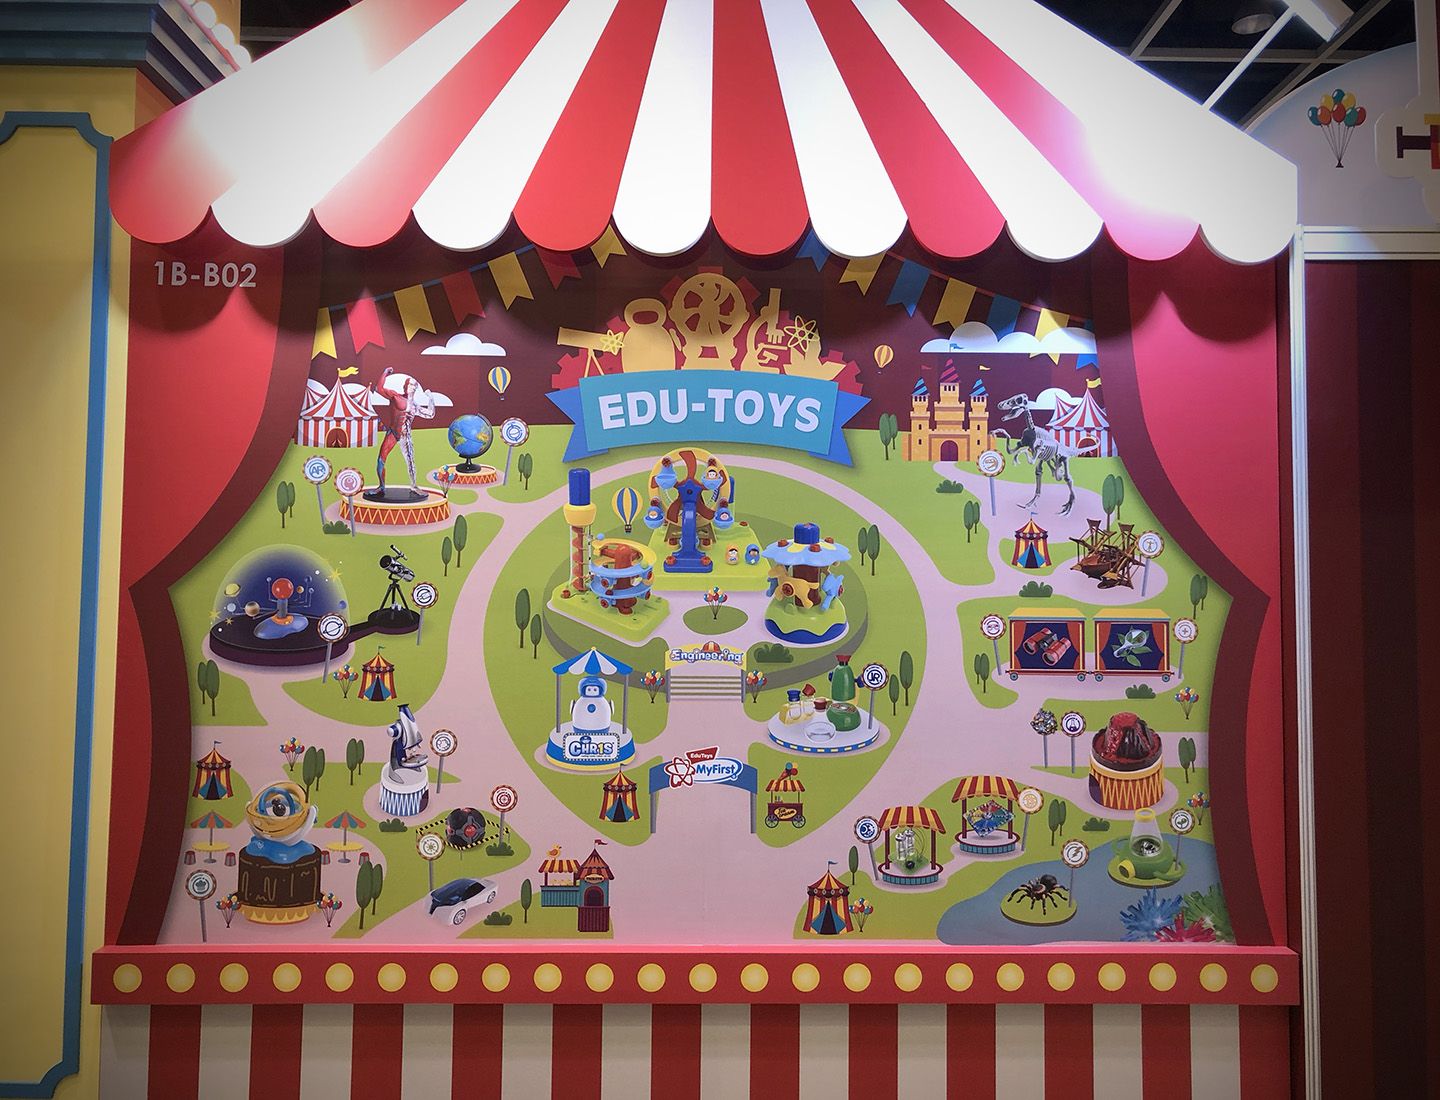 HK Toys & Game Fair Booth